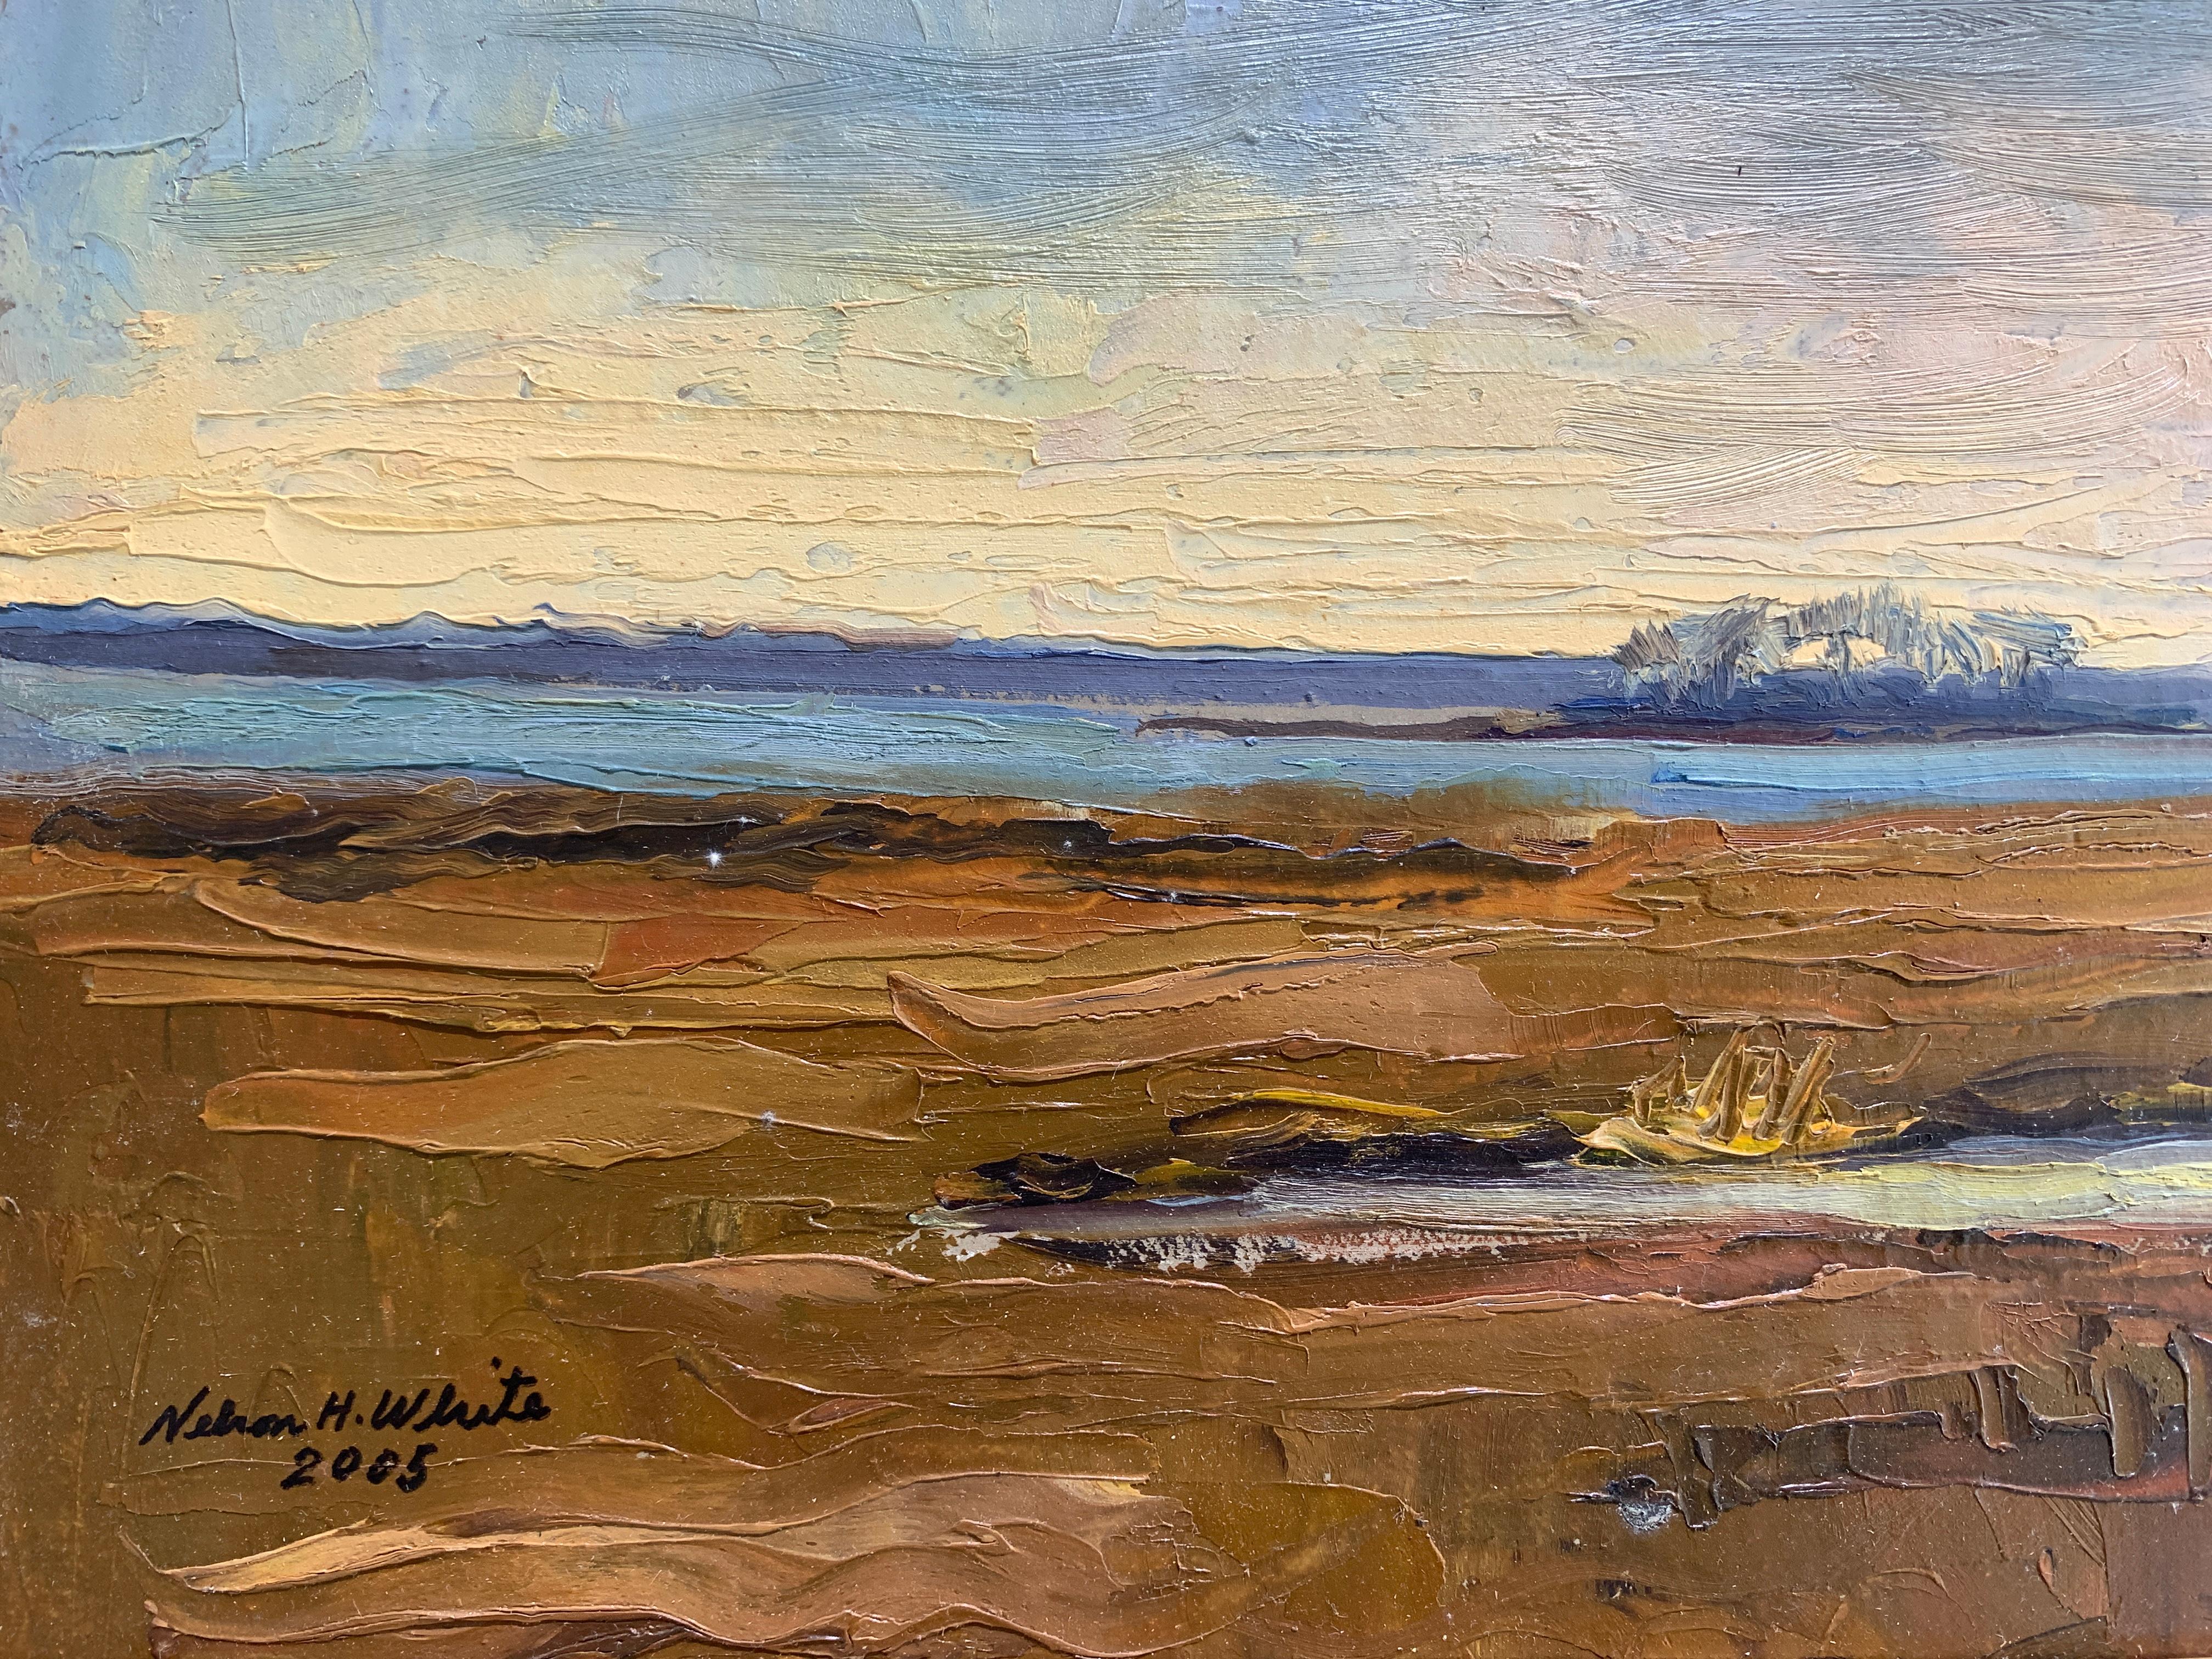 Mashomack Pt 12.27.2005 - Brown Landscape Painting by Nelson H. White